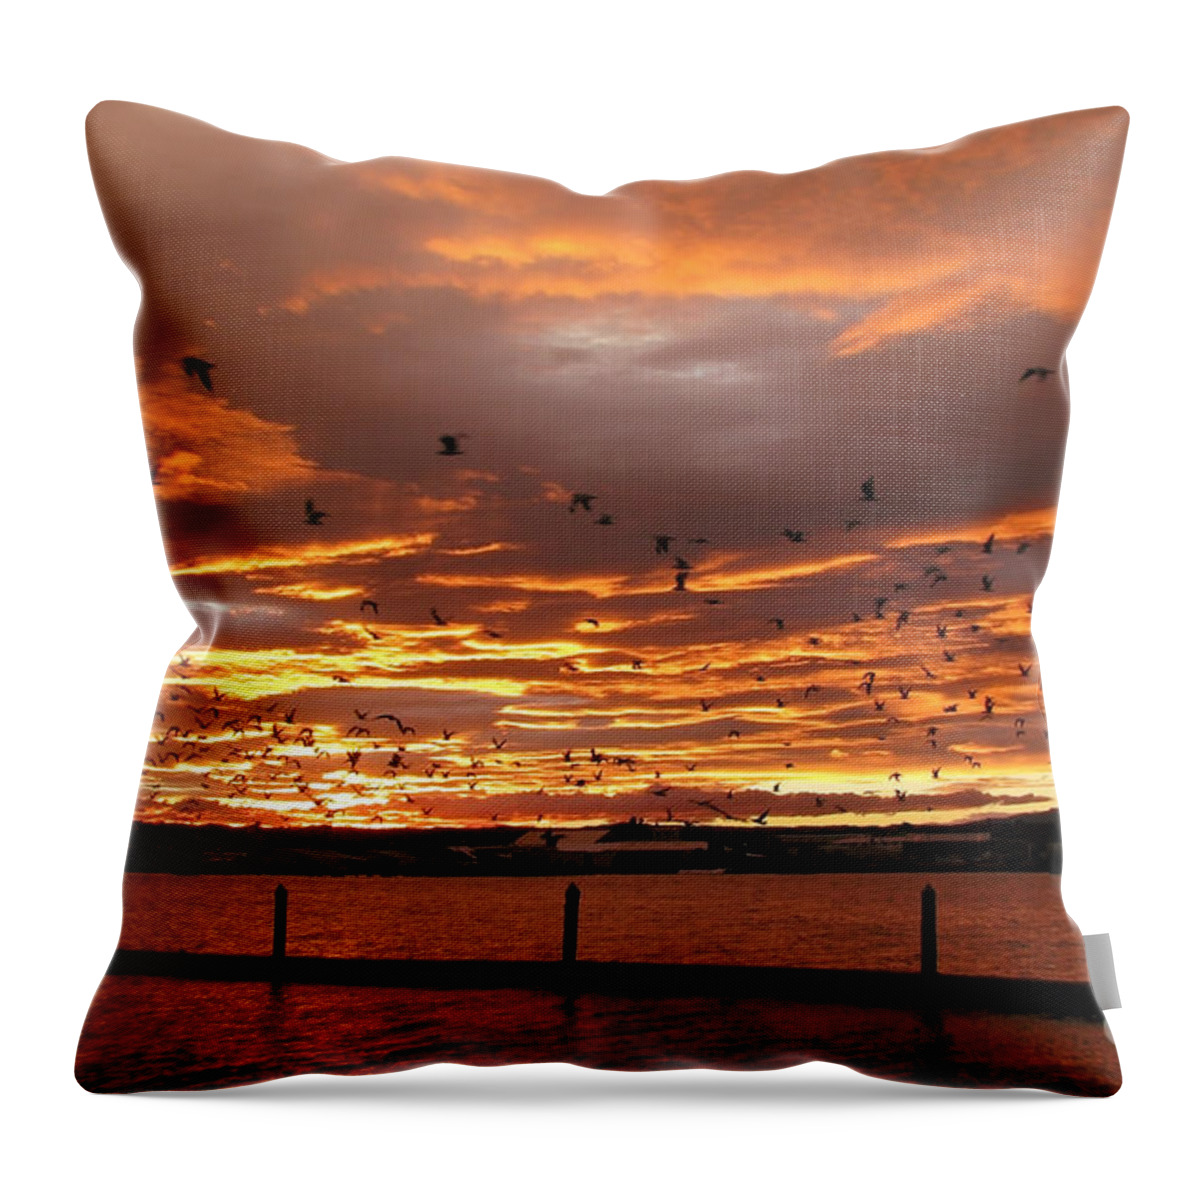 Sunset Throw Pillow featuring the photograph Sunset in Tauranga New Zealand by Jola Martysz